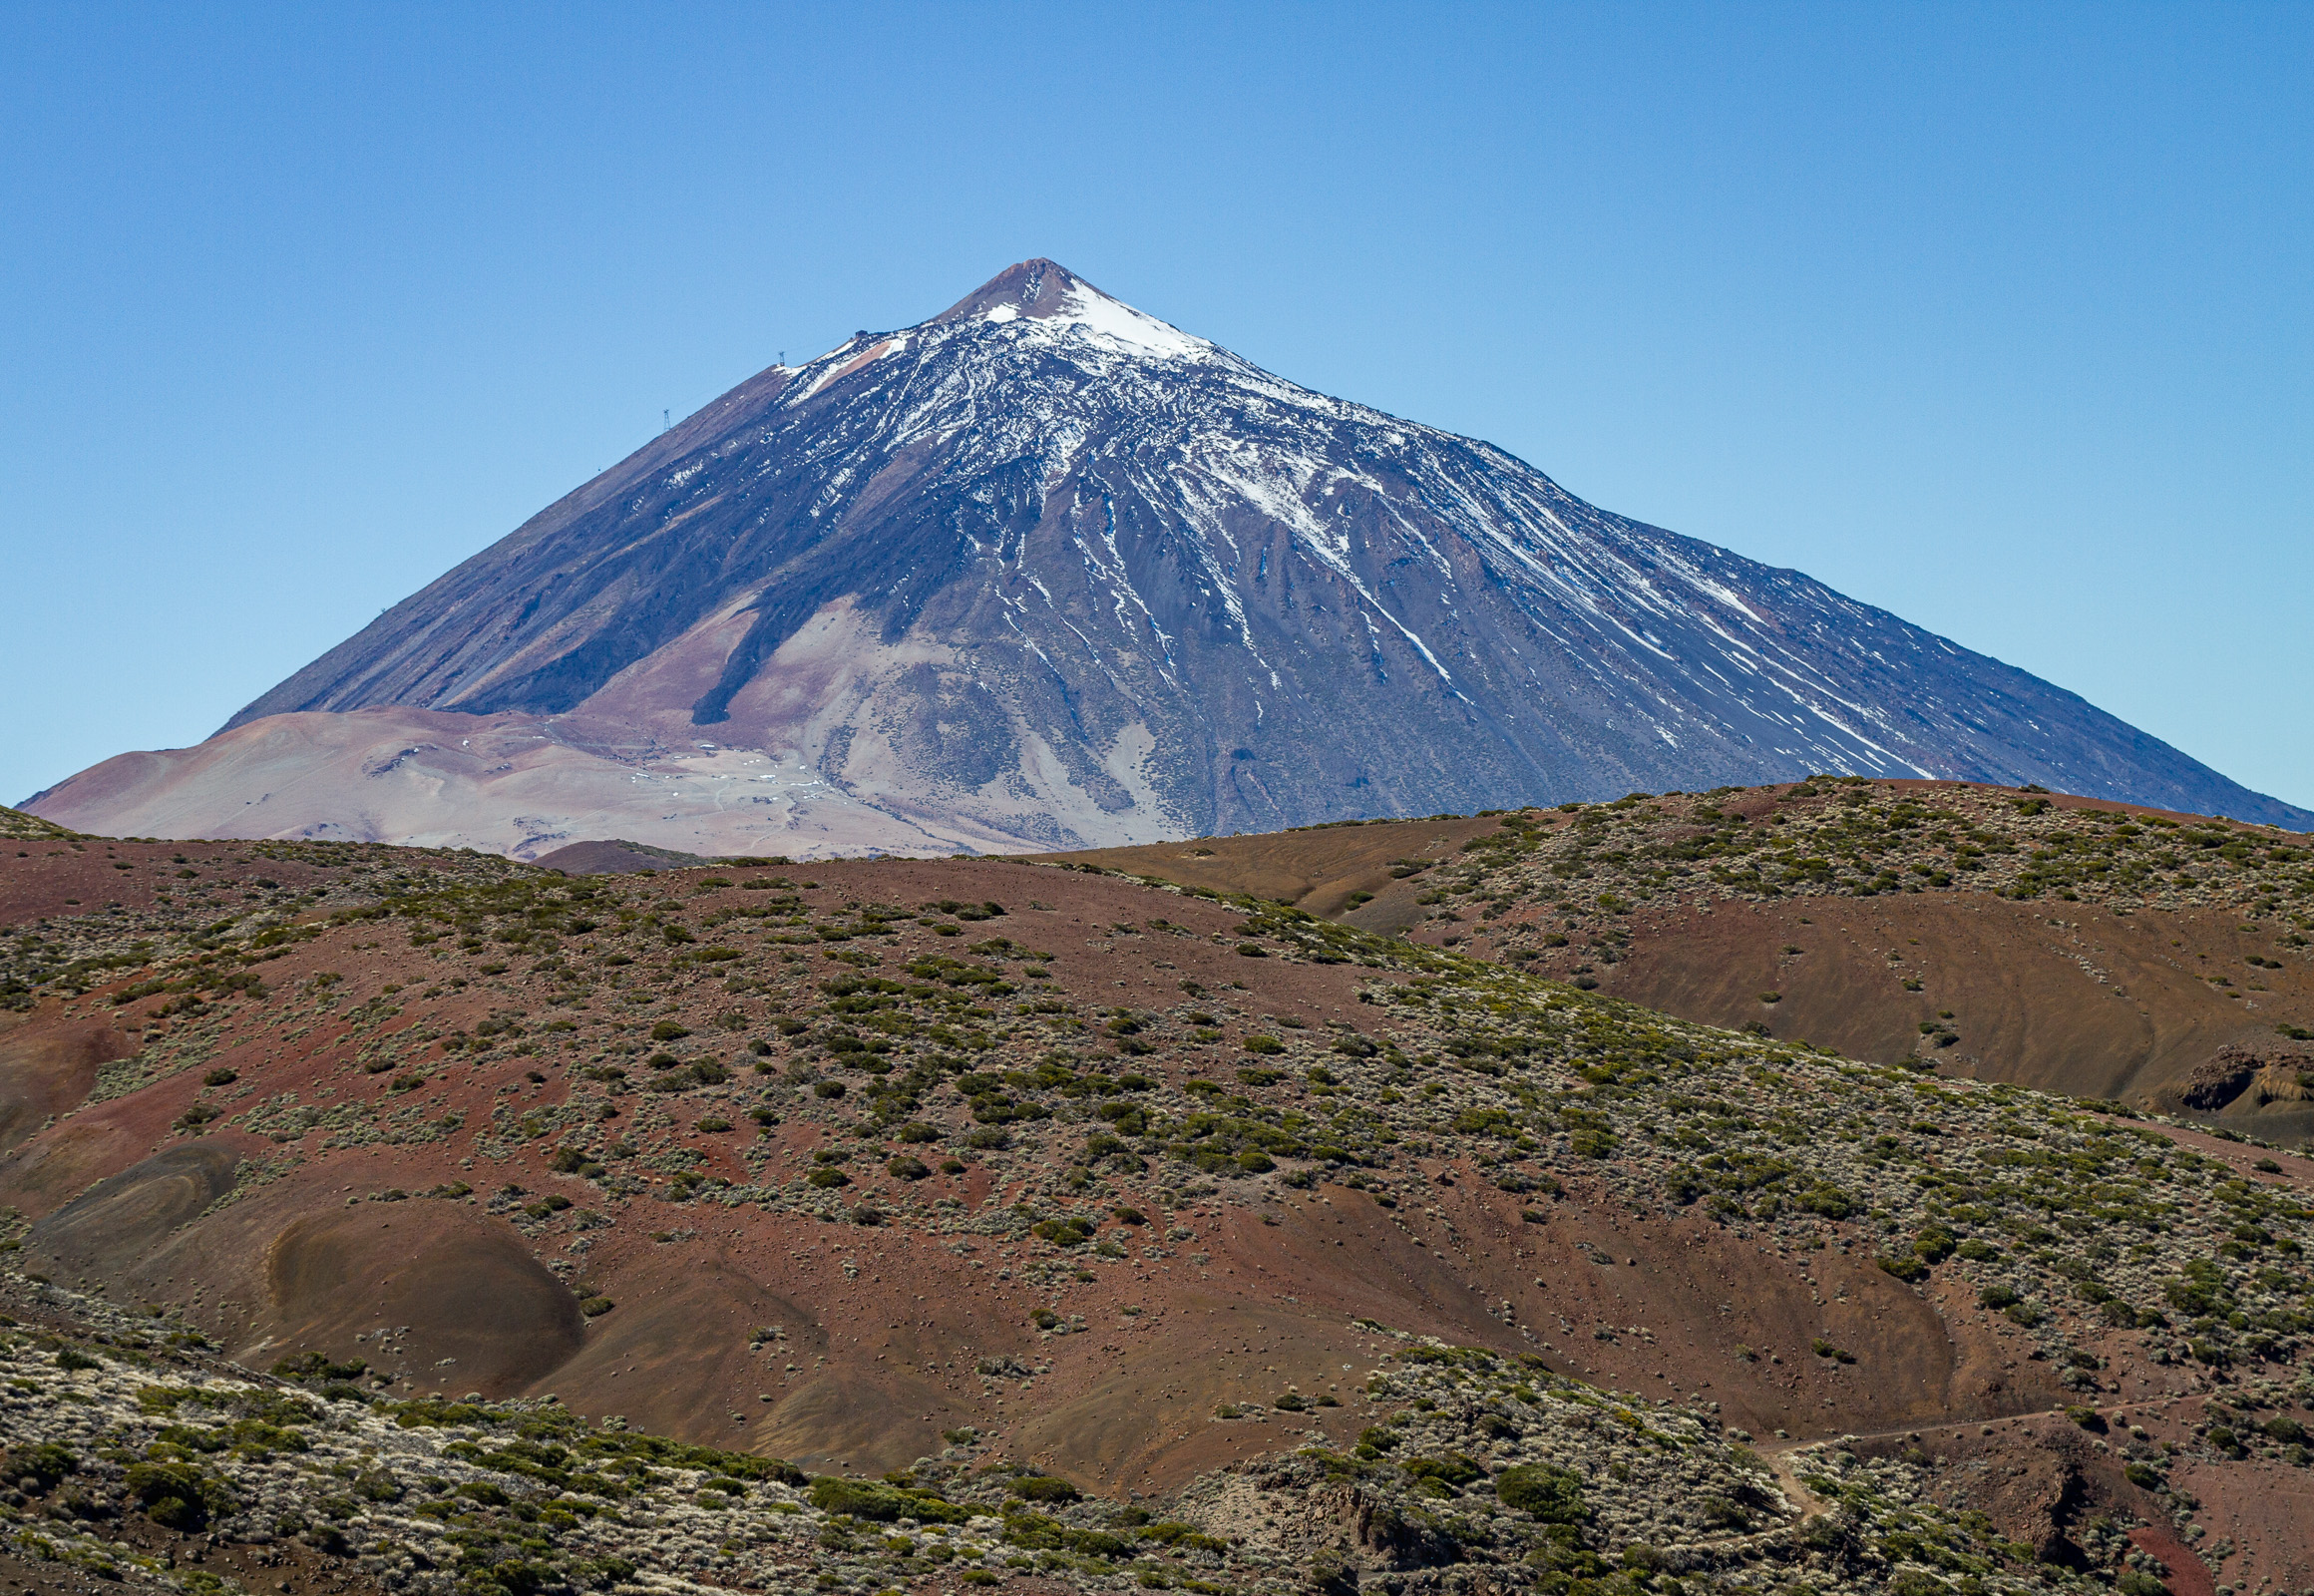 Mount Teide snowcap, Tenerife